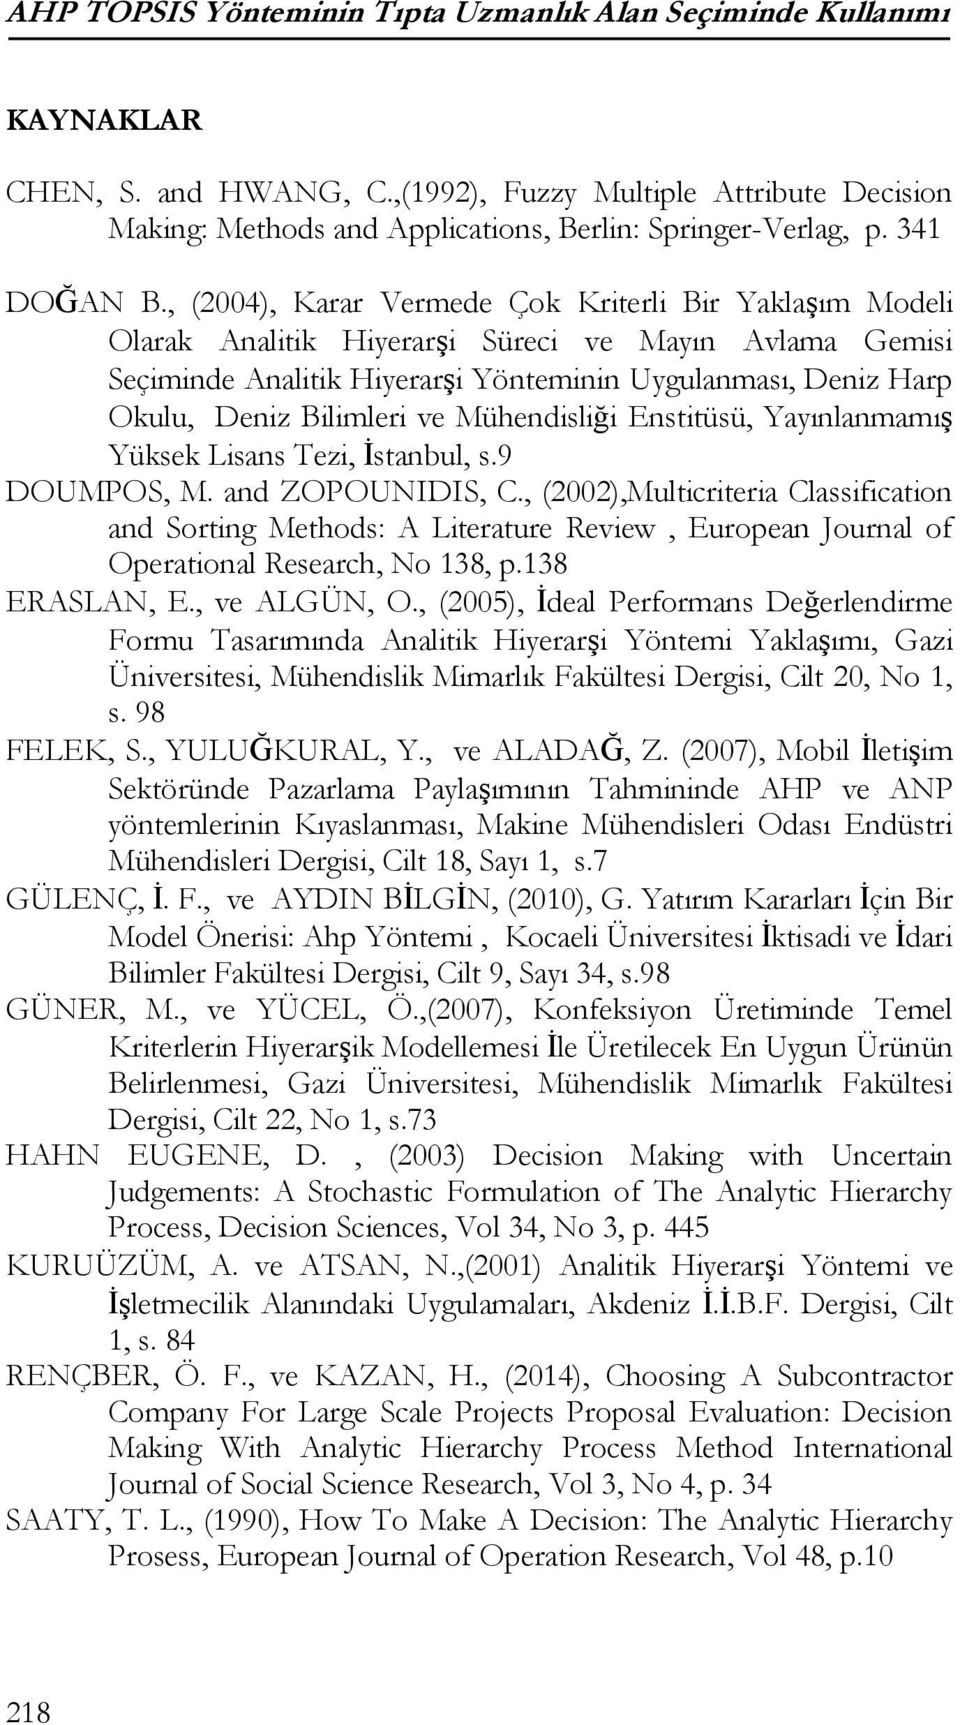 Bilimleri ve Mühendisliği Enstitüsü, Yayınlanmamış Yüksek Lisans Tezi, İstanbul, s9 DOUMPOS, M and ZOPOUNIDIS, C, (2002),Multicriteria Classification and Sorting Methods: A Literature Review,